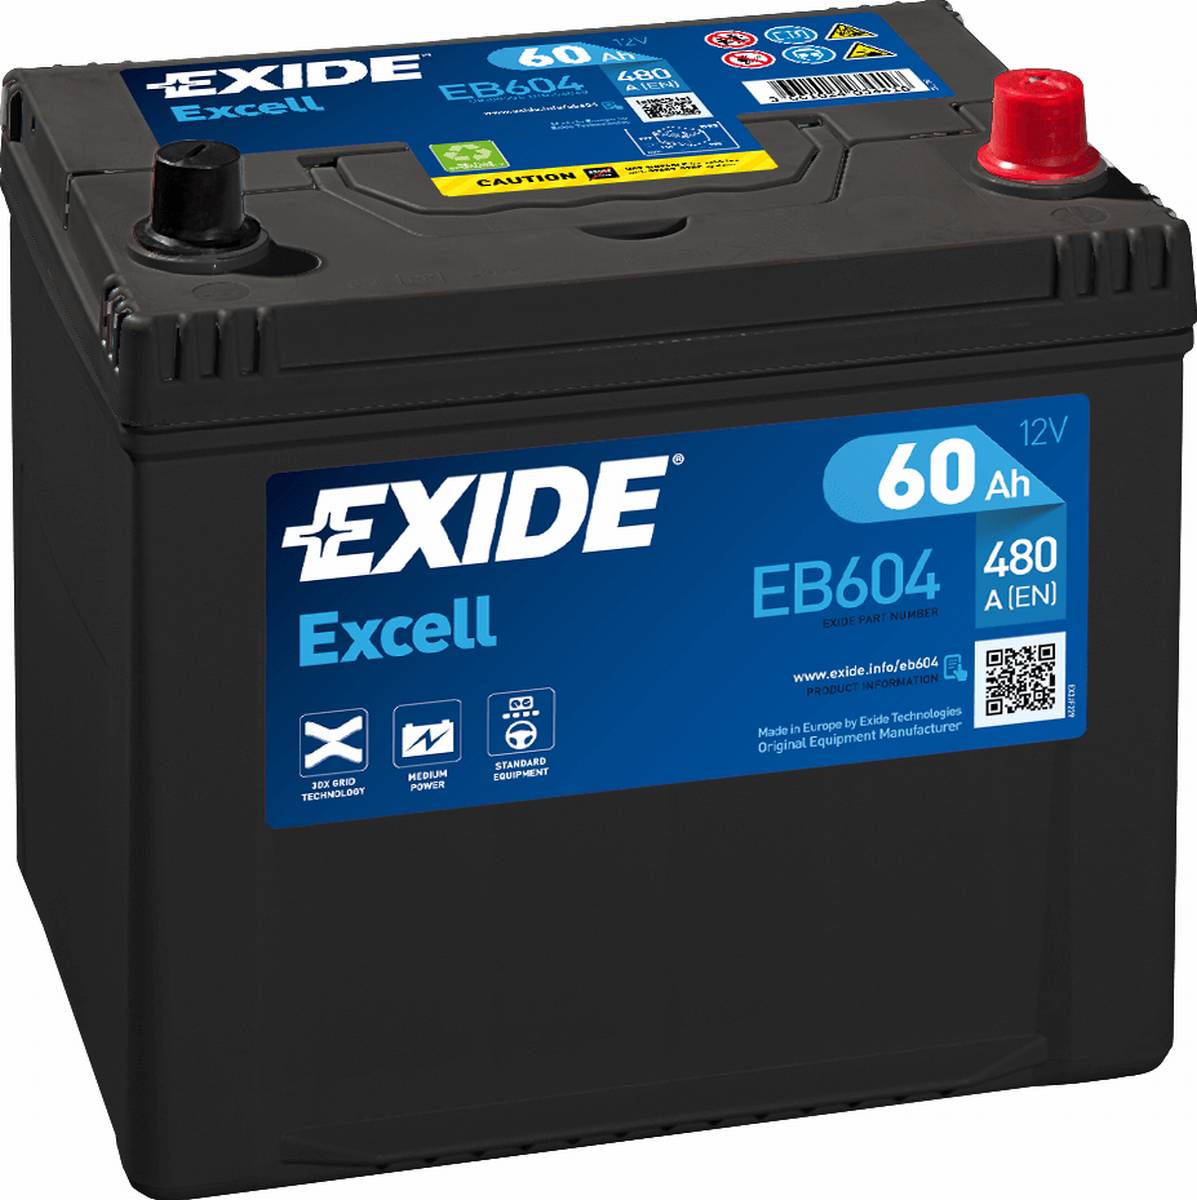 Exide EB604 Excell 12V 60Ah 480A Autobatterie, Starterbatterie, Boot, Batterien für